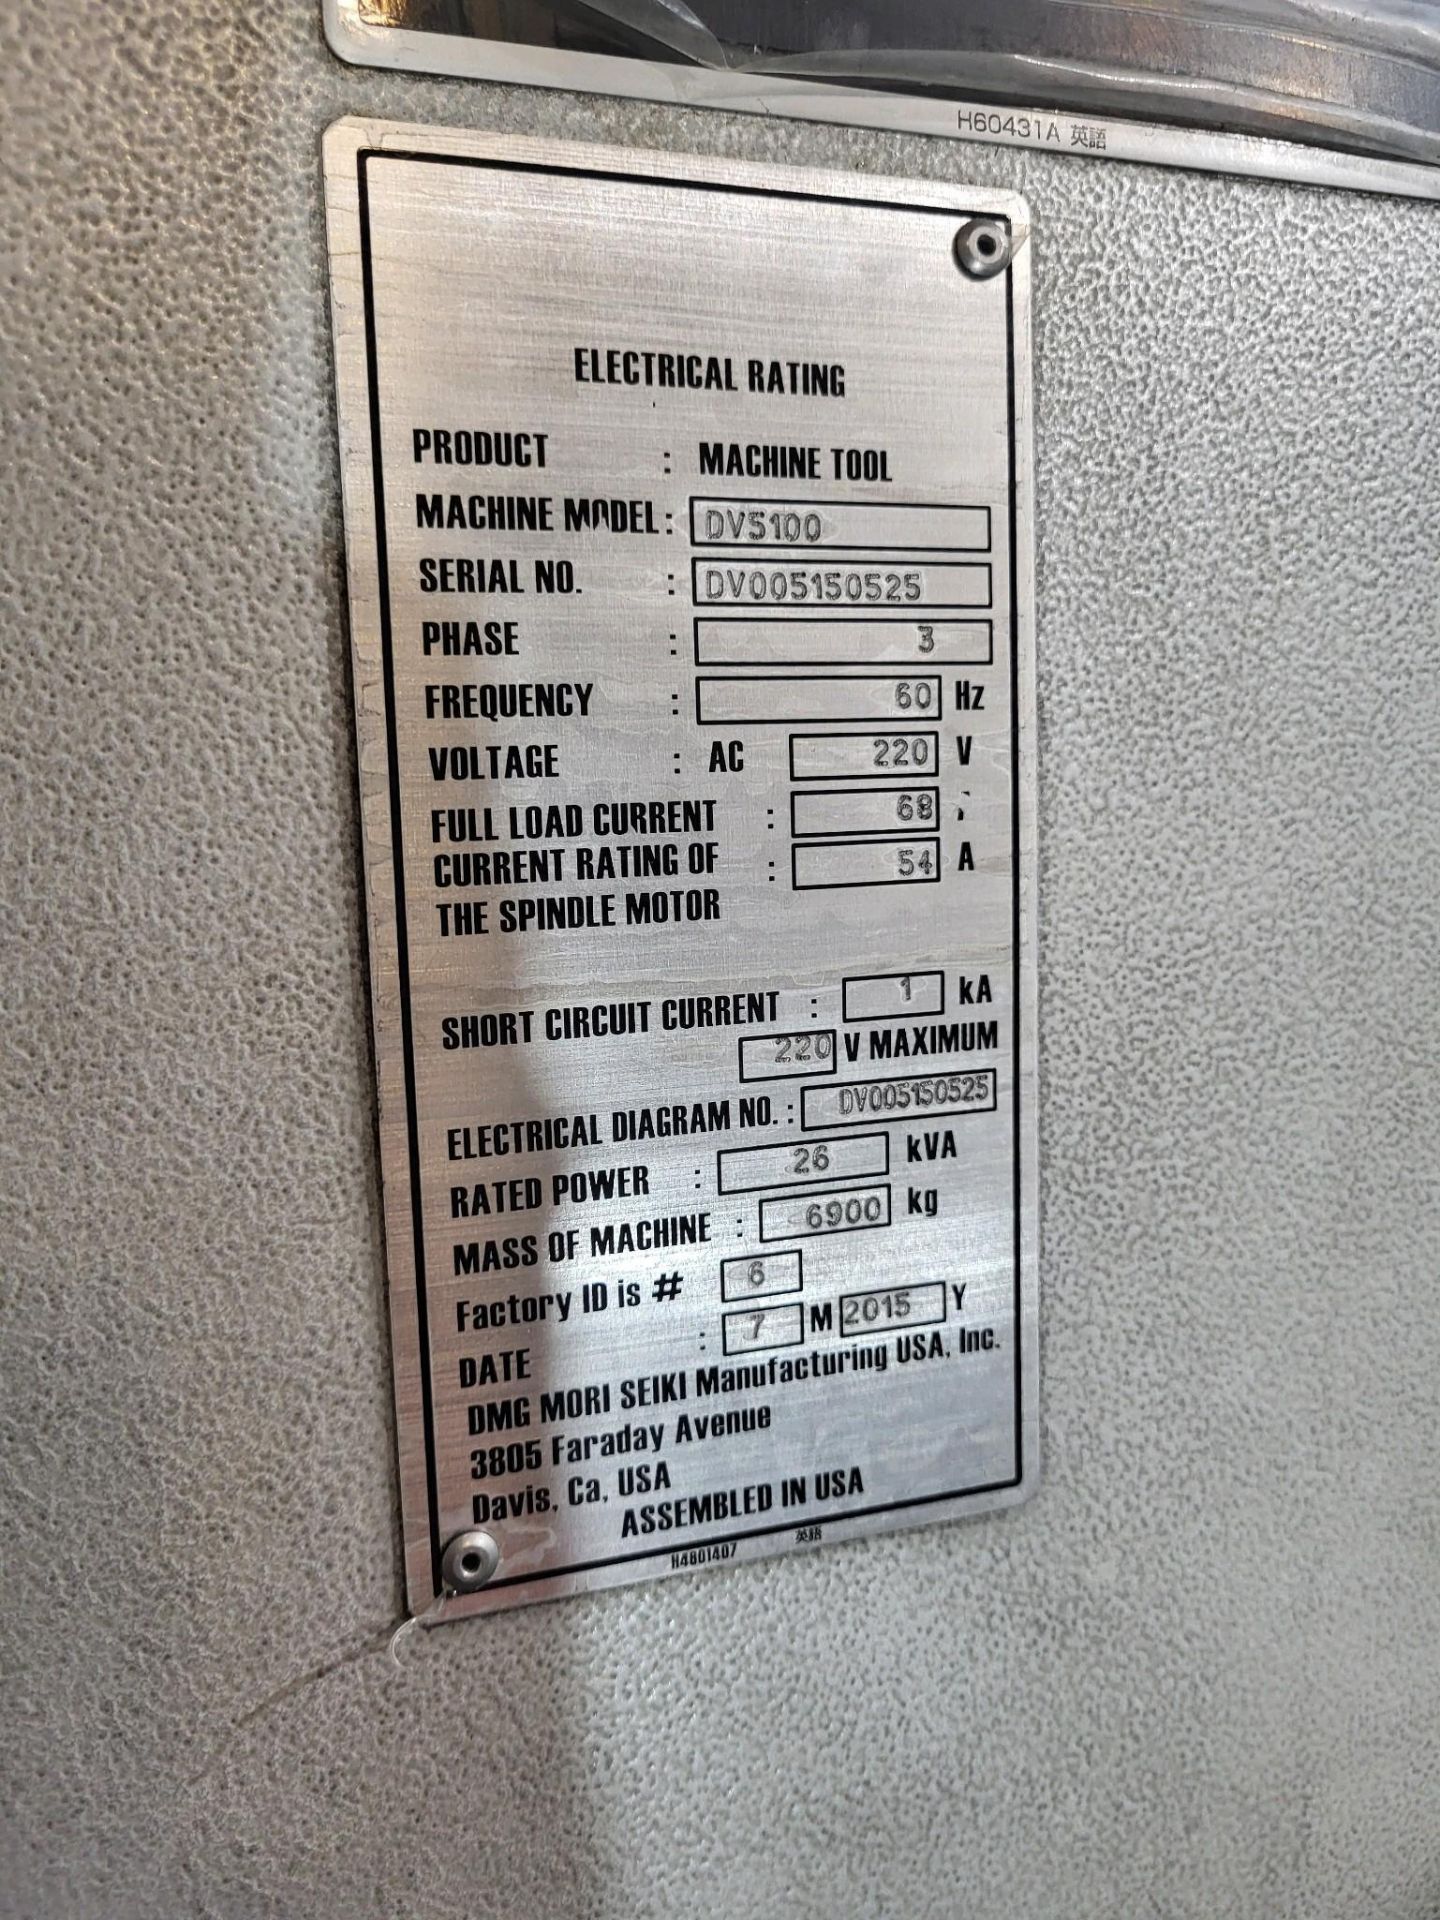 2015 DMG MORI DURAVERTICAL 5100 CNC VERTICAL MACHINING CENTER - Image 12 of 14